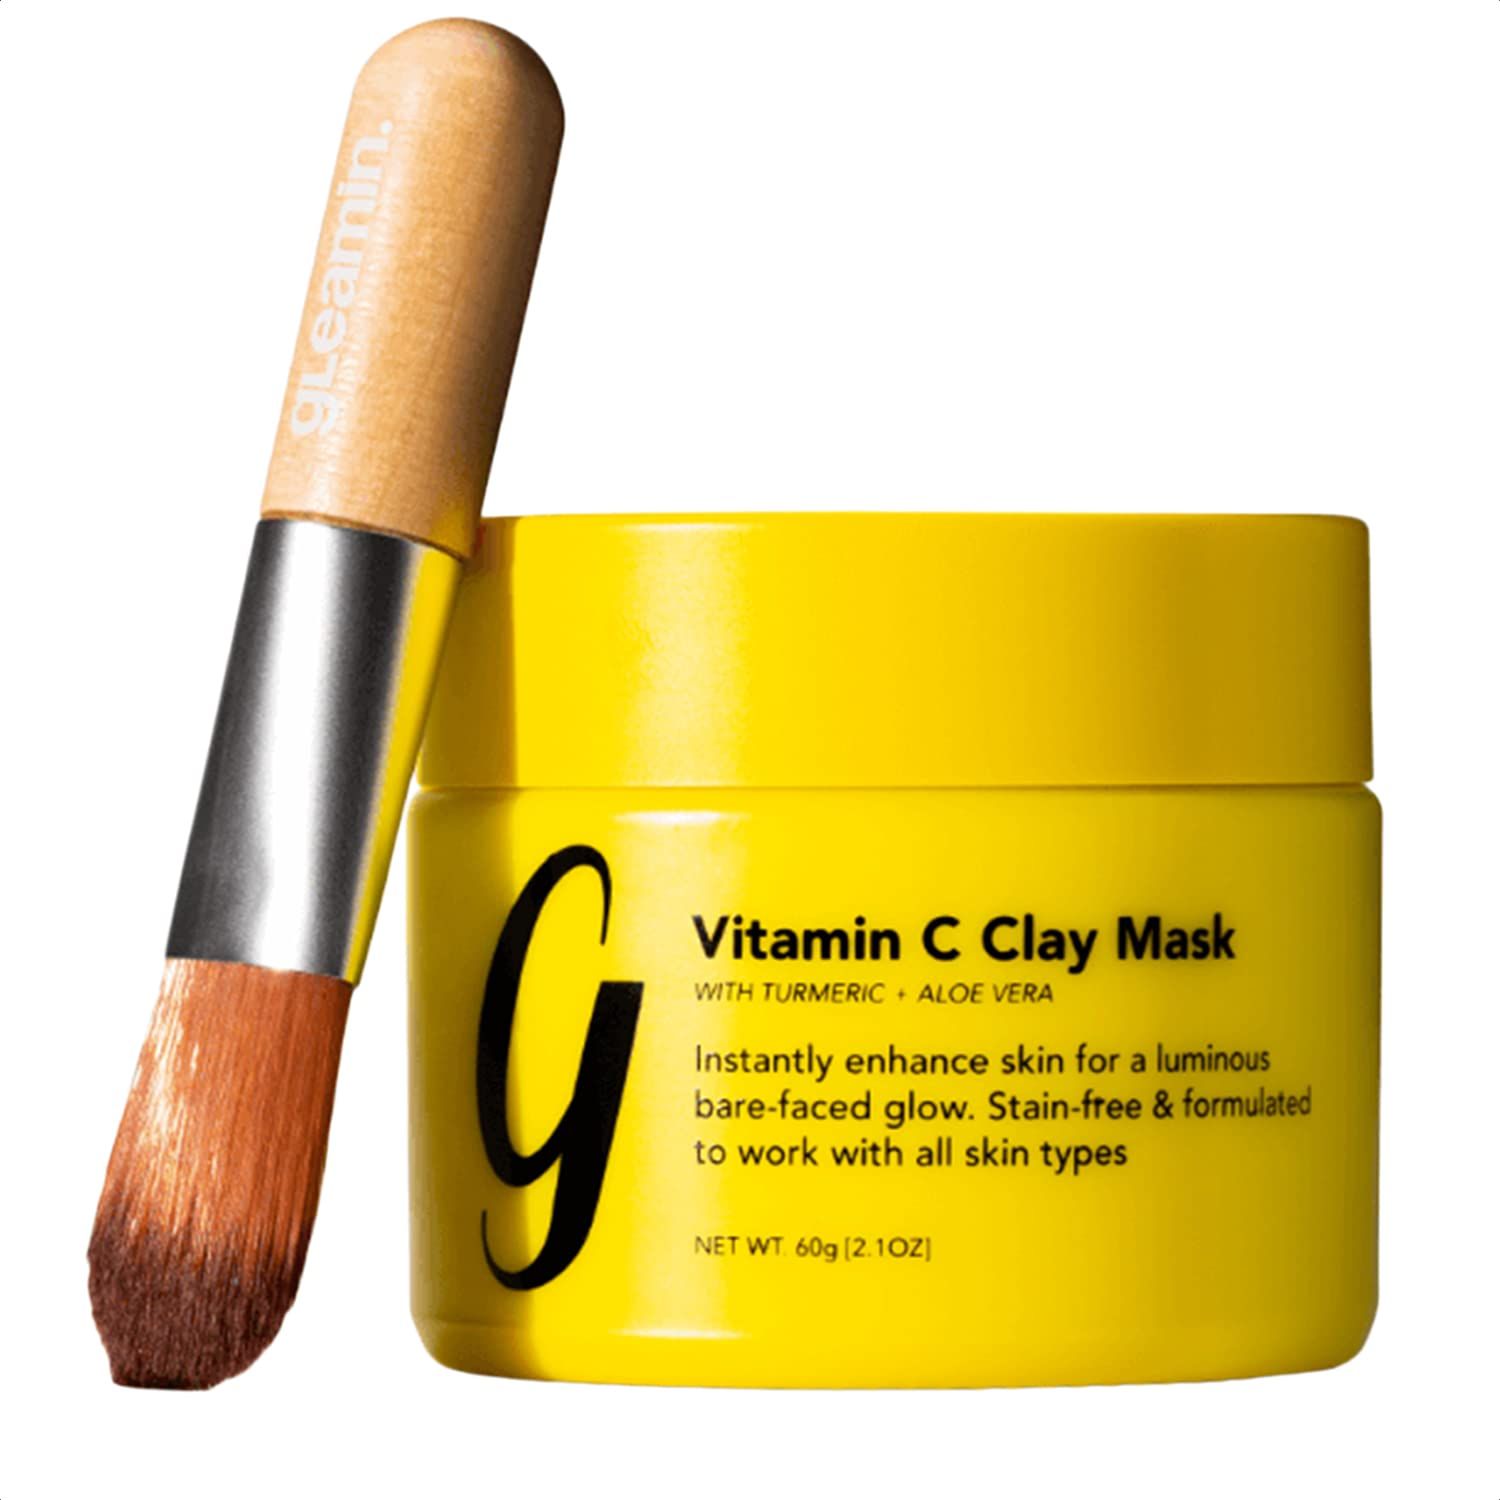 Gleamin Turmeric Vitamin C Clay Mask & Brush - Clay Face Mask with Aloe - Vegan Treatment & Brush... | Amazon (US)